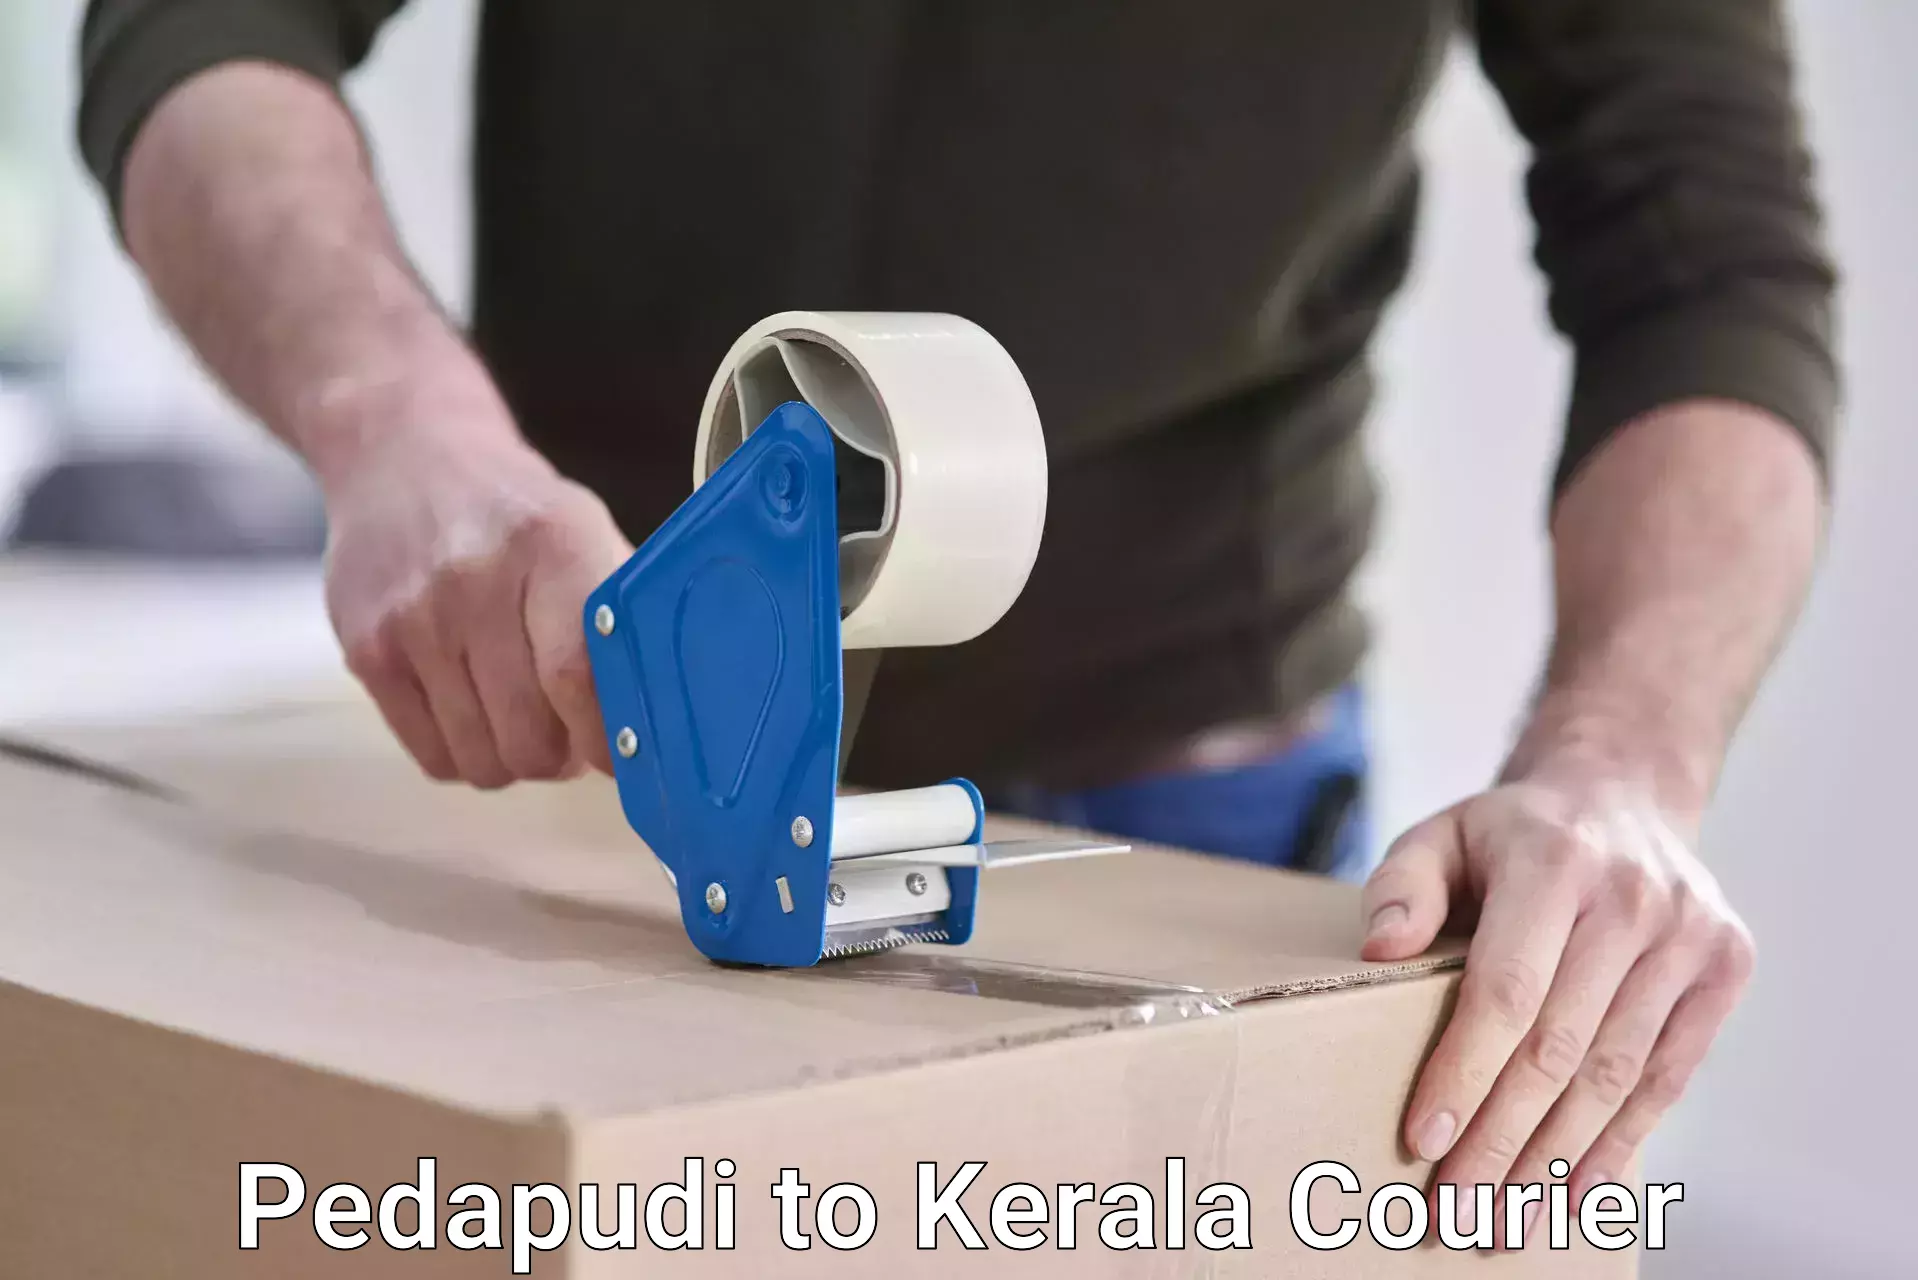 On-demand shipping options Pedapudi to Kerala